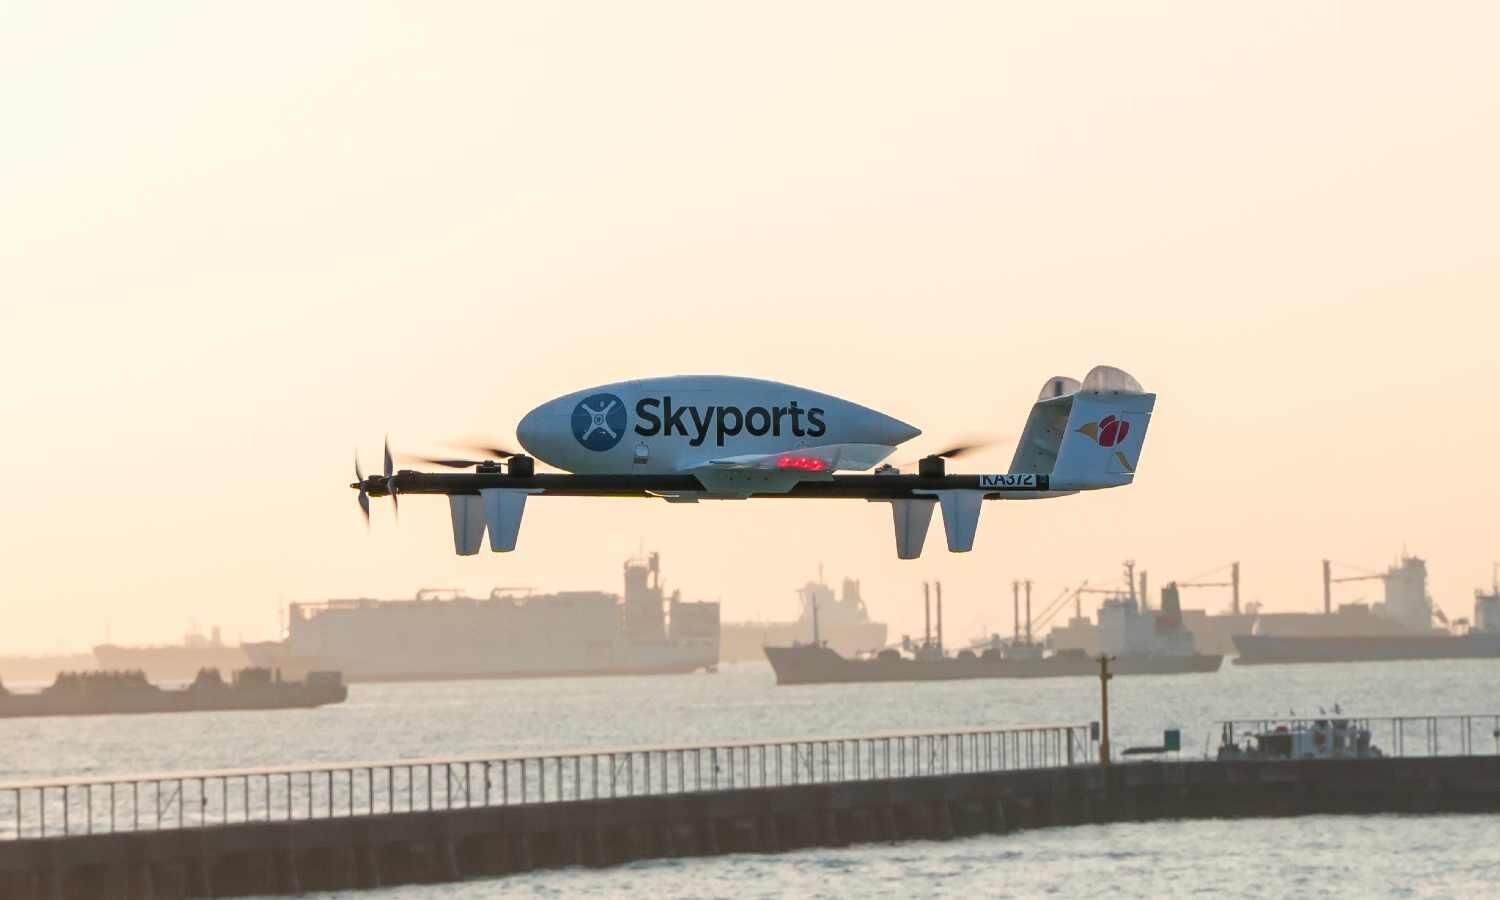 Skyports raises $23 million in Series B funding; strengthens position as global leader